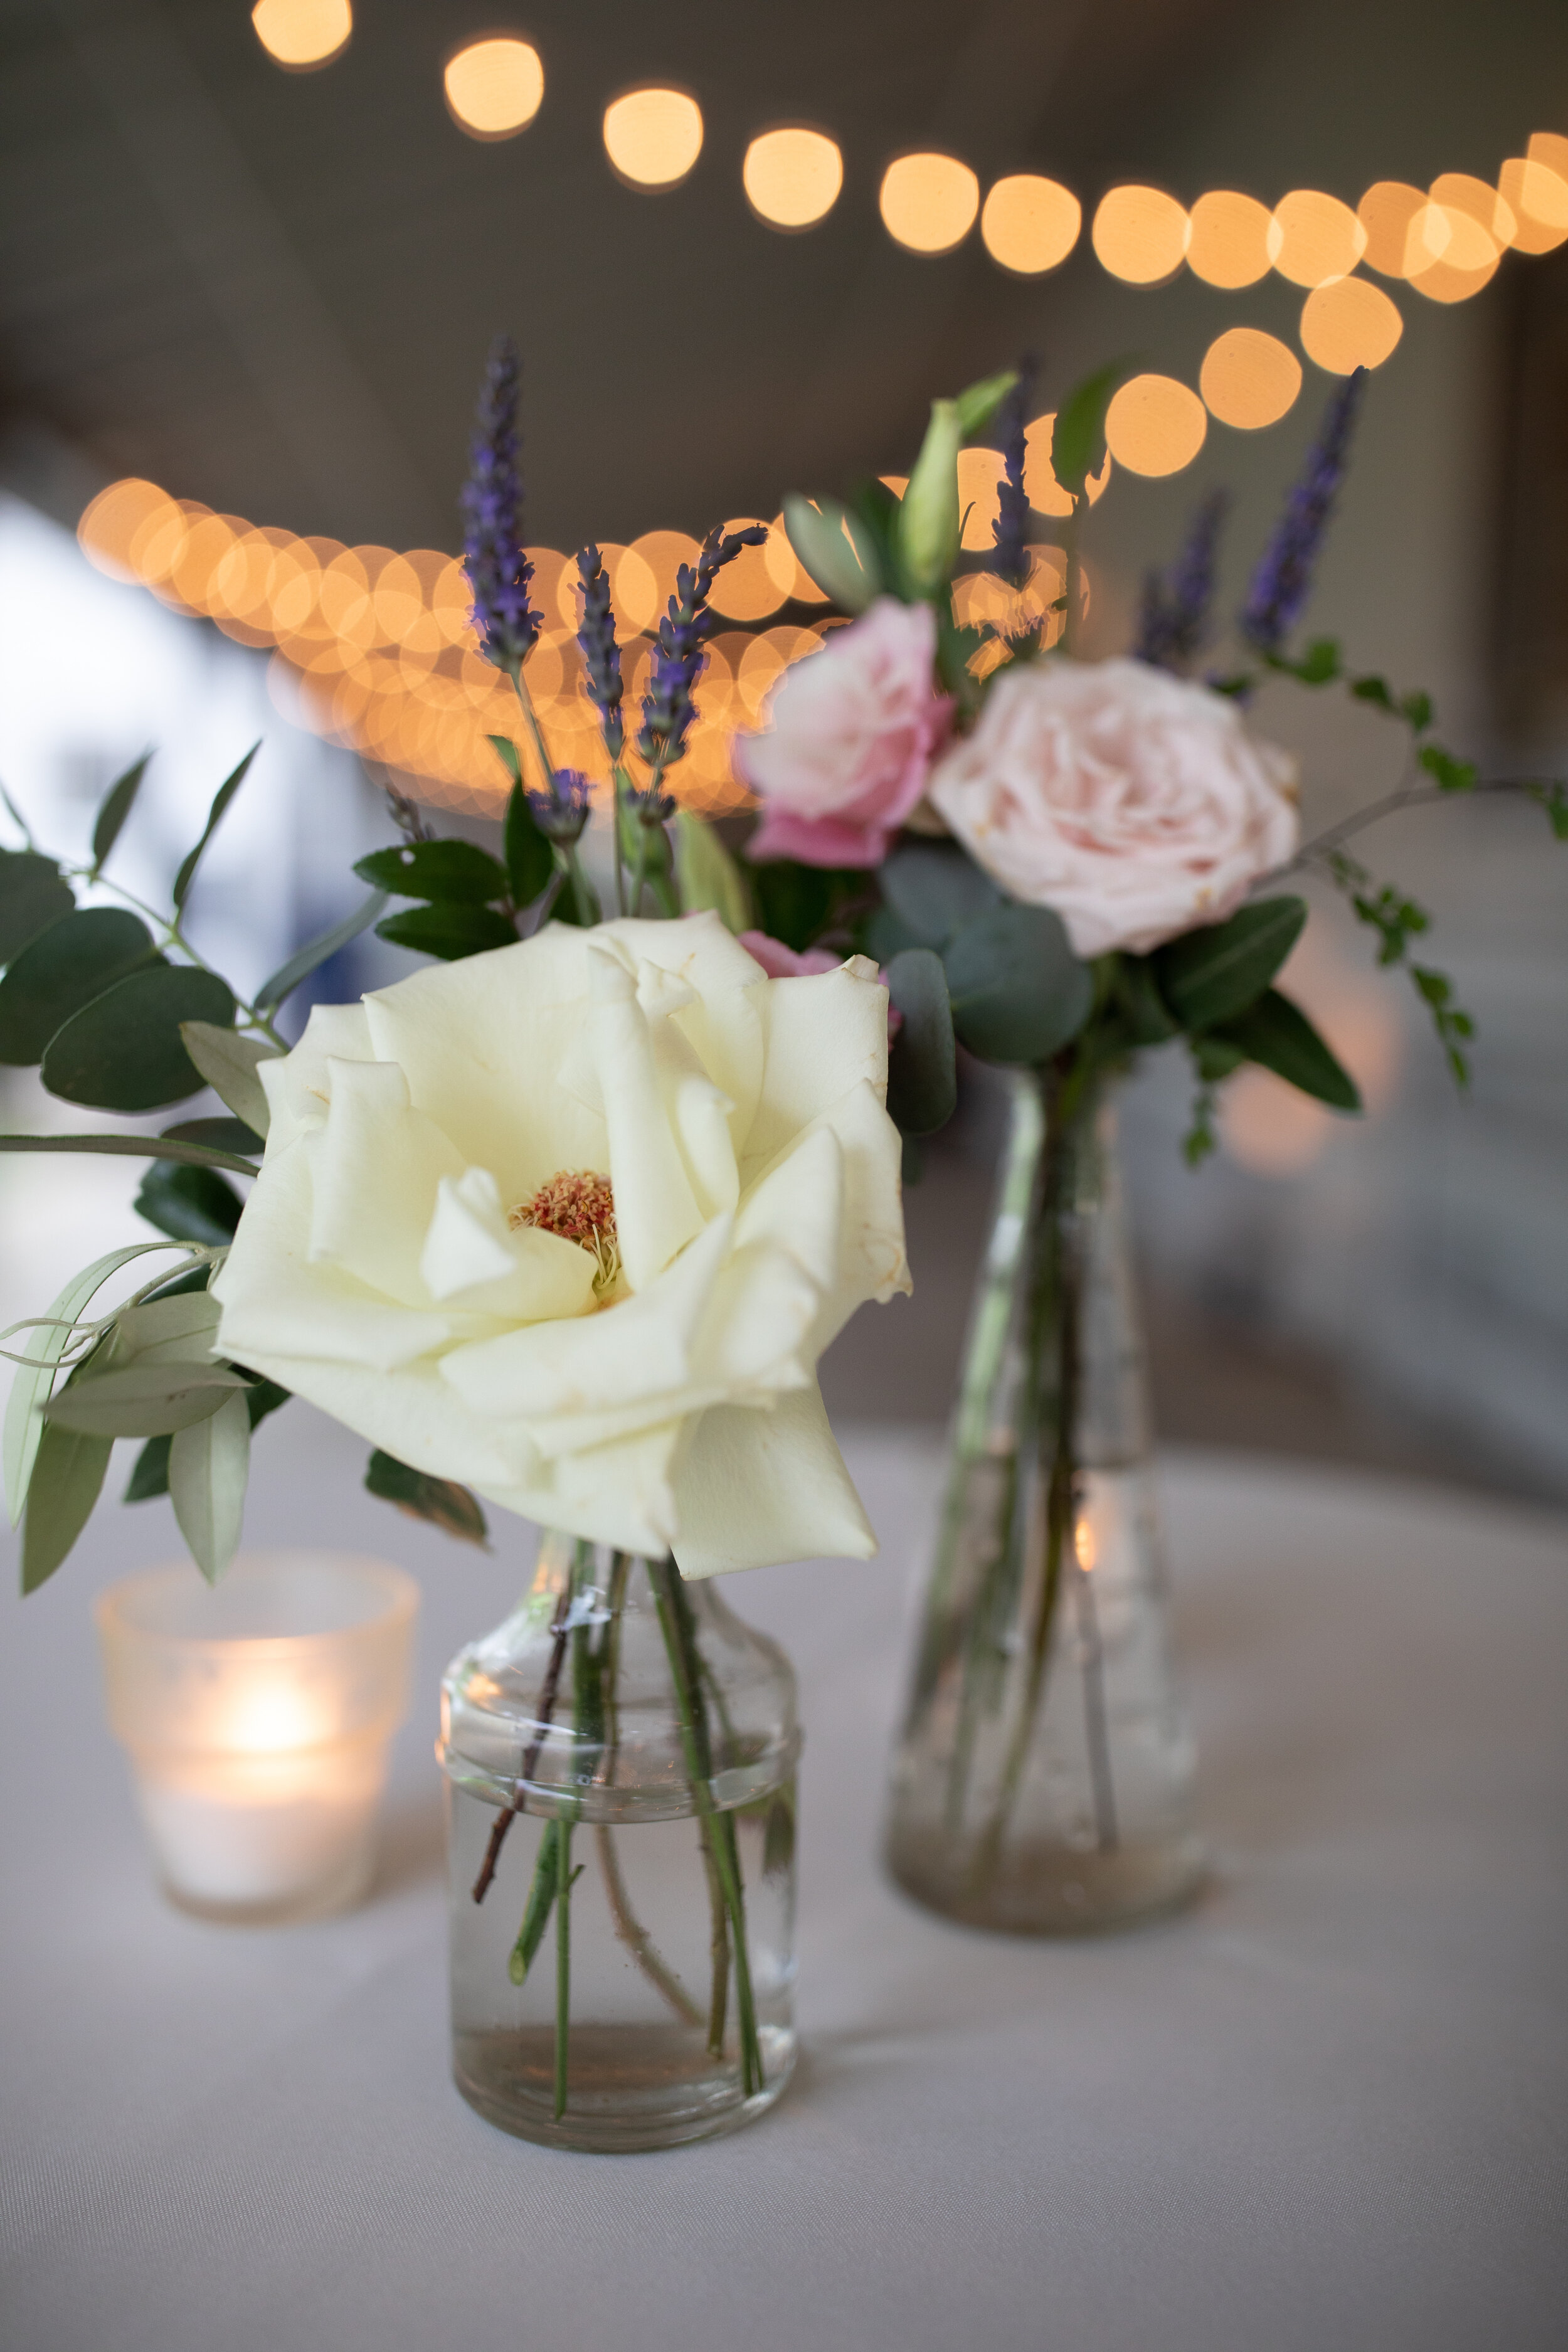 Dainty bud vases with garden roses, lavender, ferns, and olive branches. Belle Meade Plantation wedding floral design.